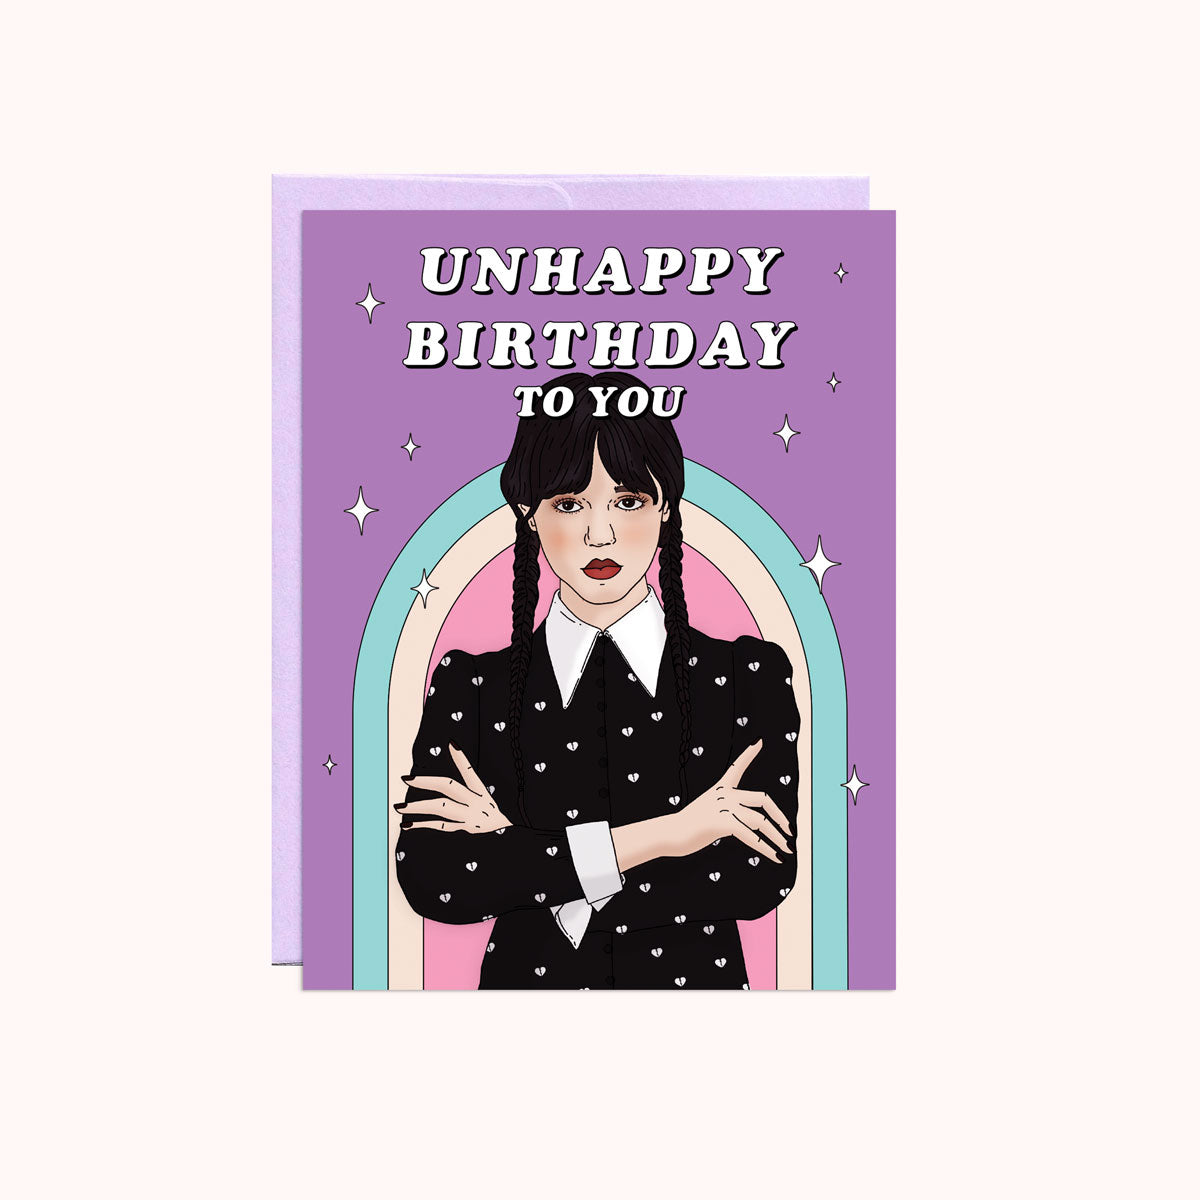 Unhappy Birthday Card